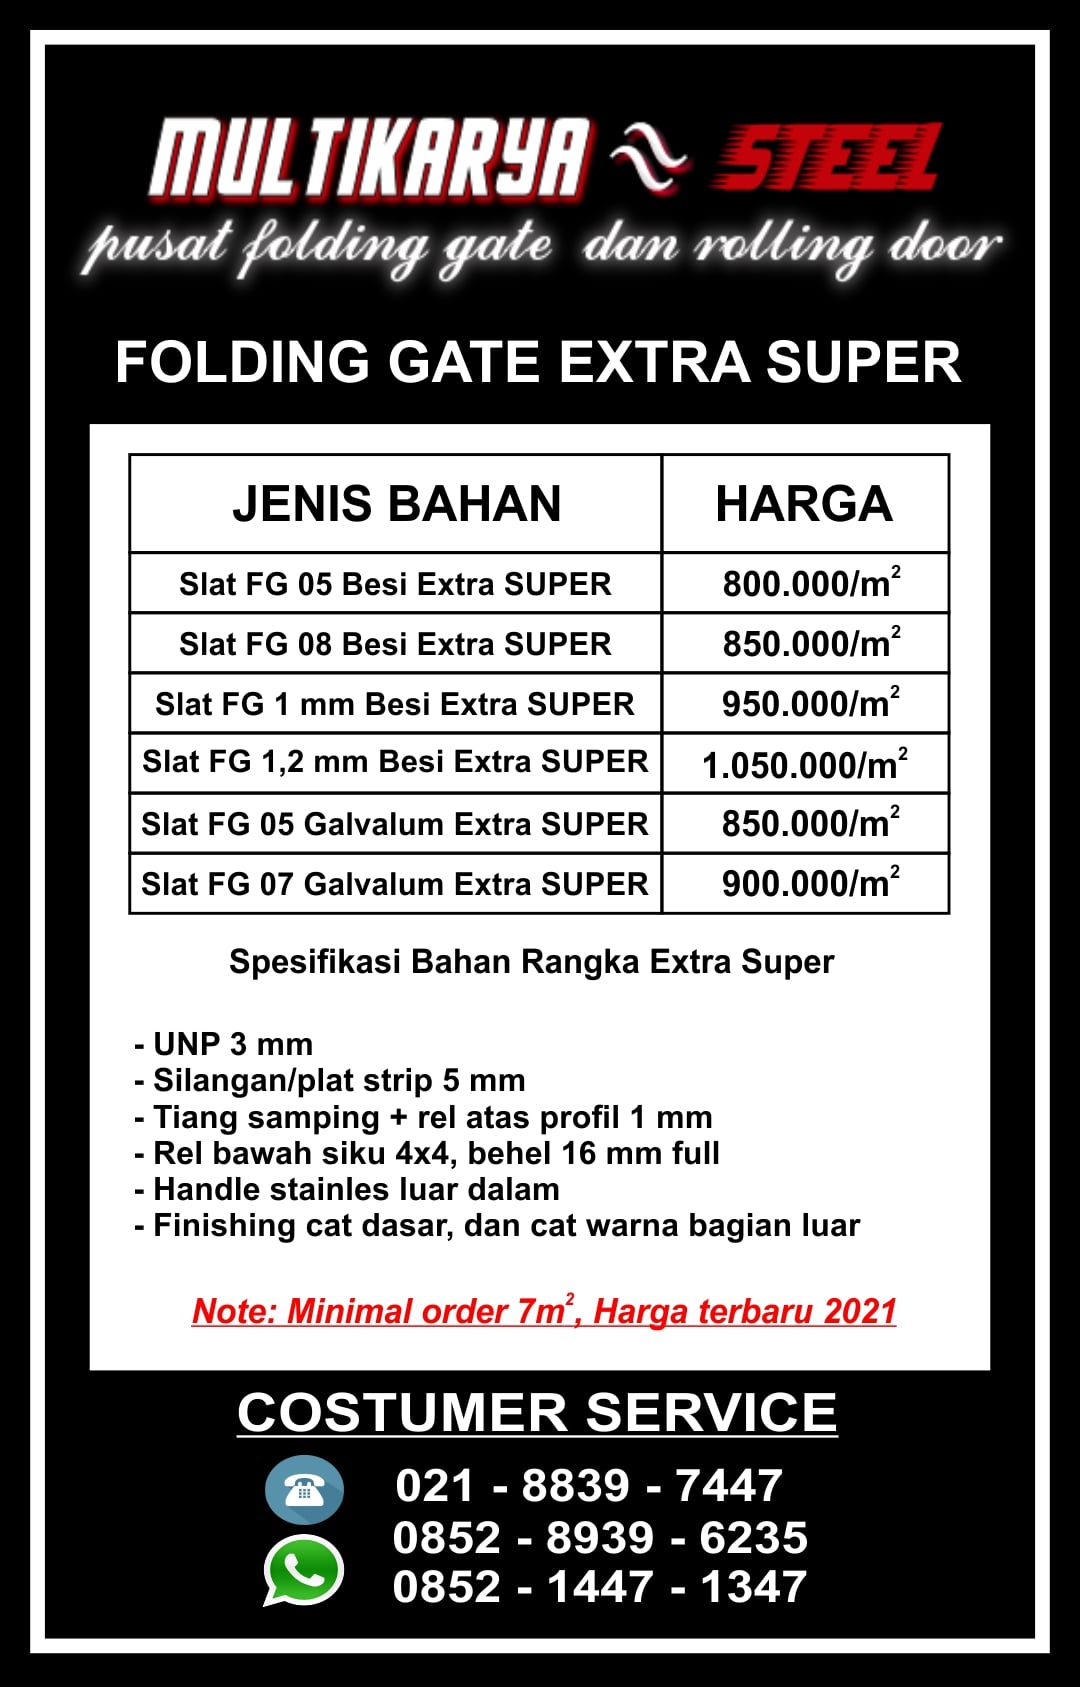 Daftar Harga Folding Gate Extra Super Multi Karya Steel